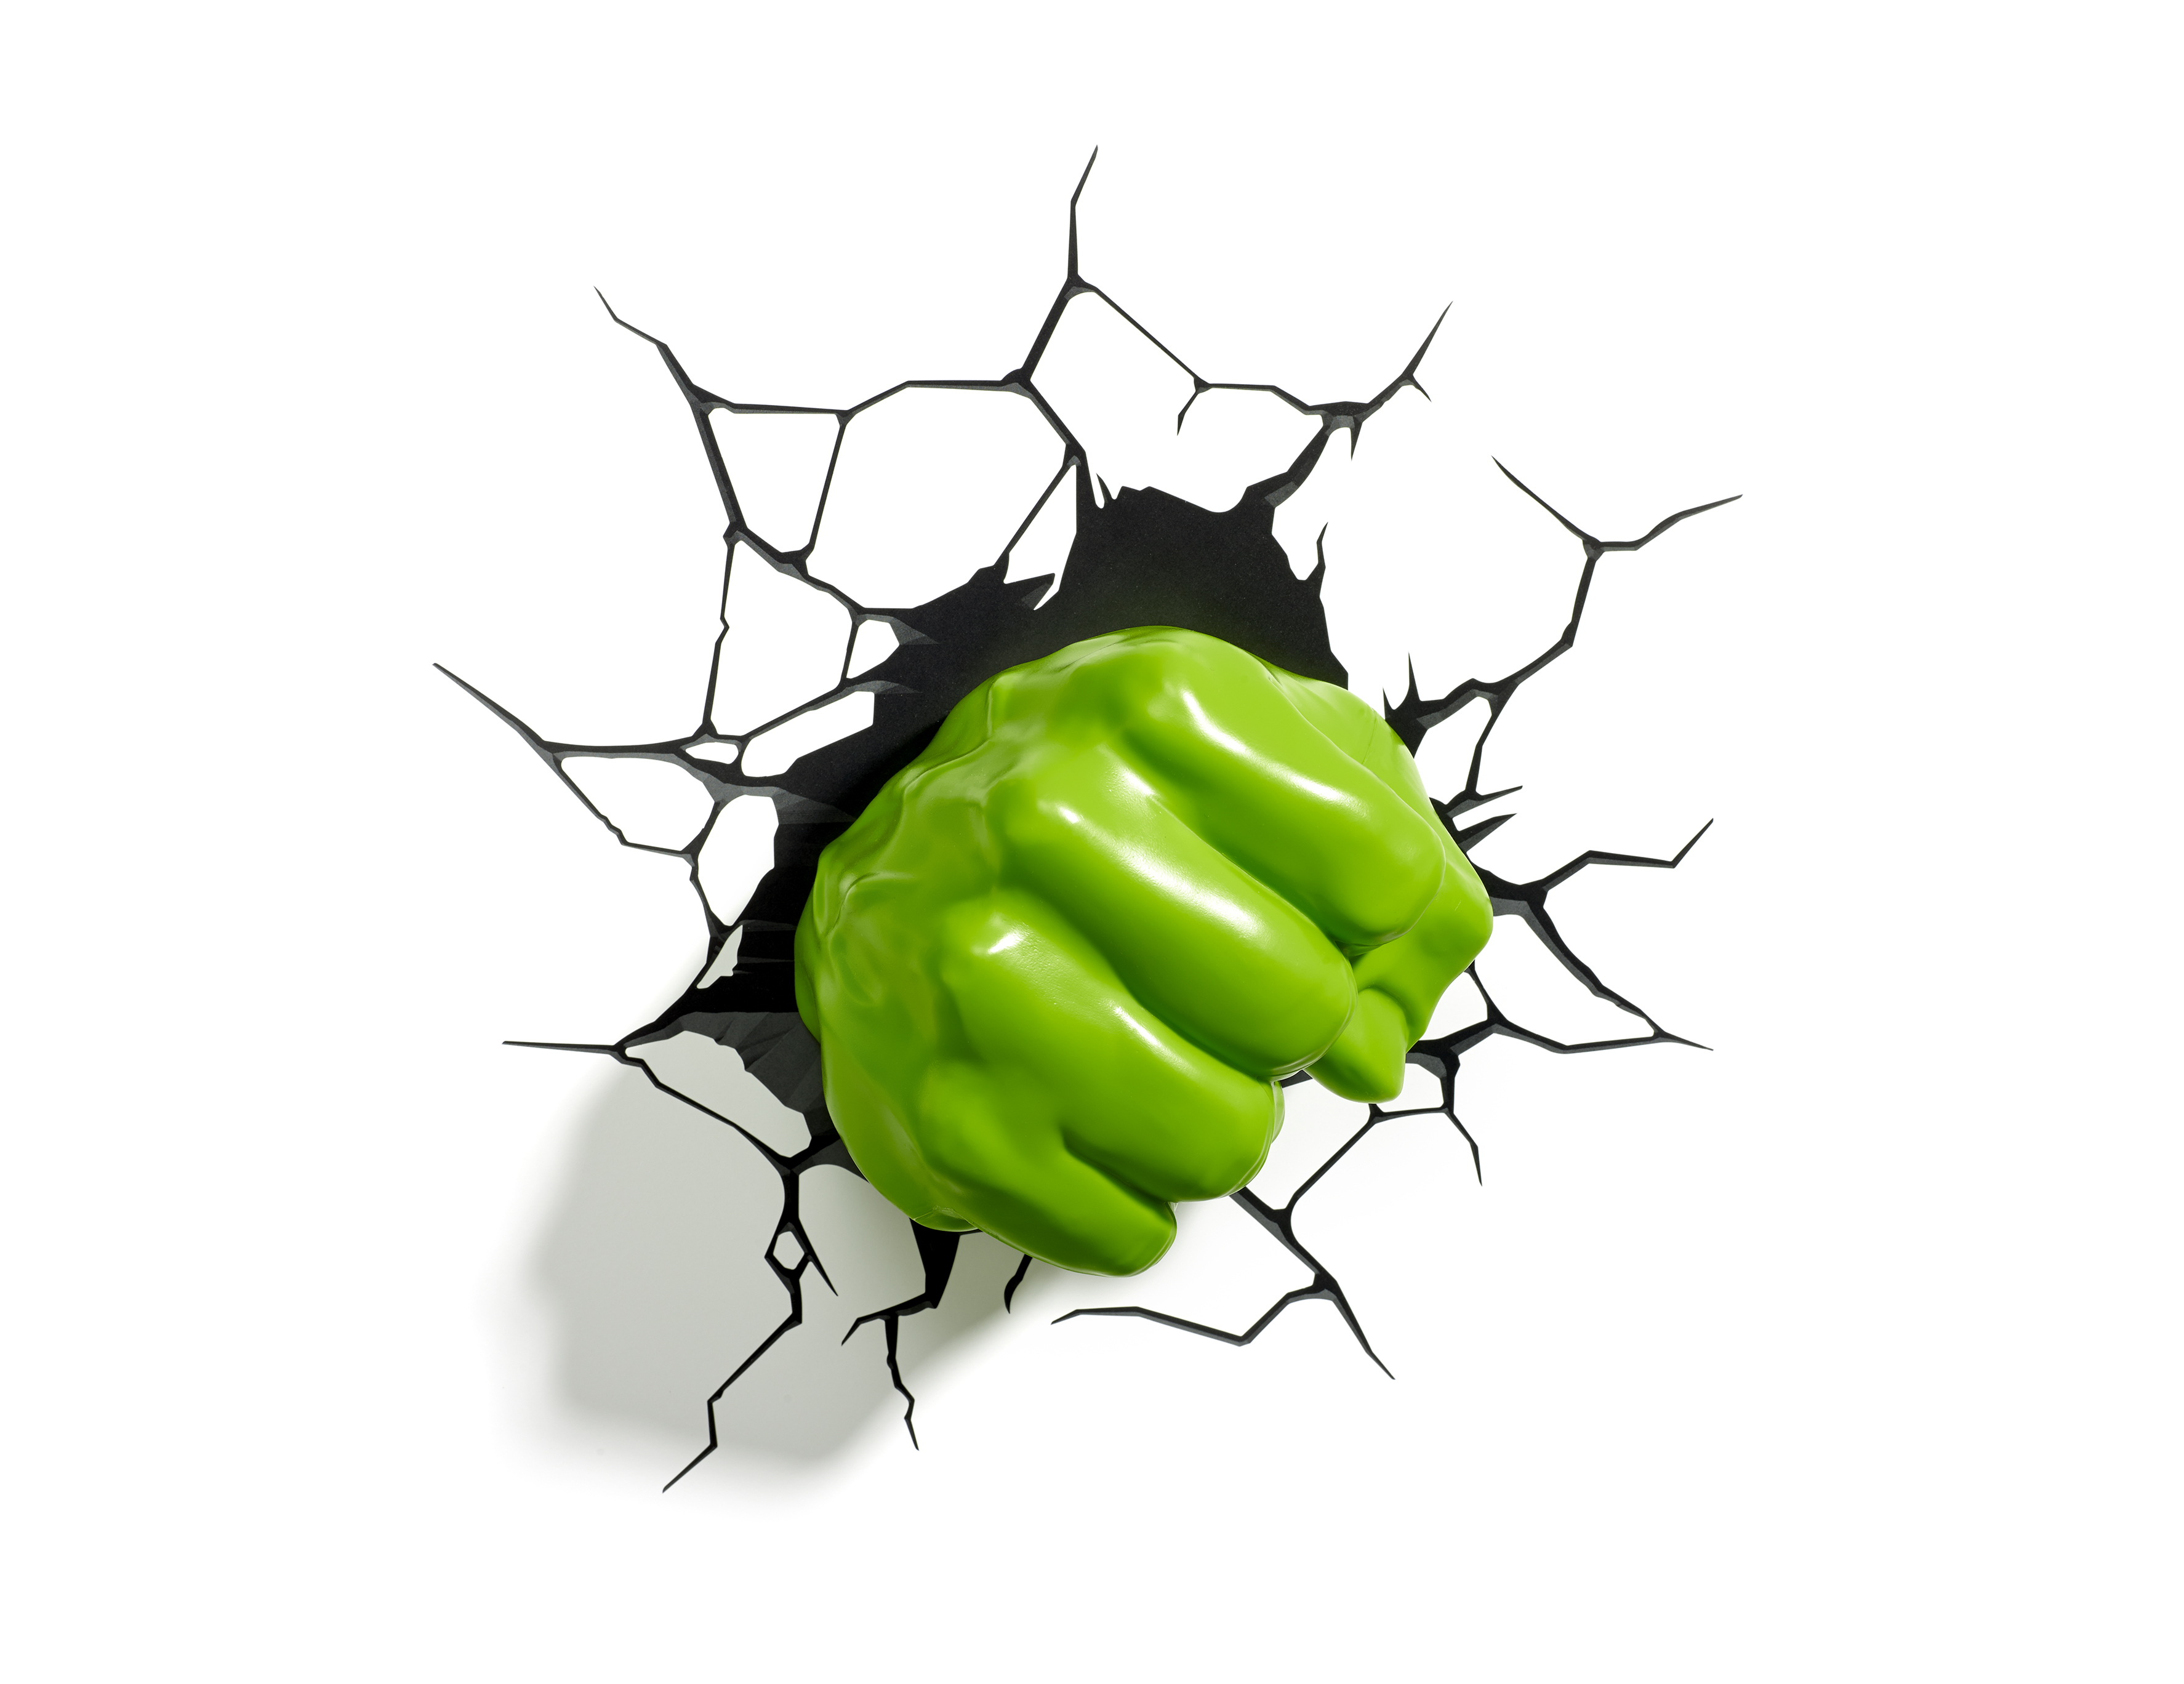 Incredible Hulk Fist Logo Clipart